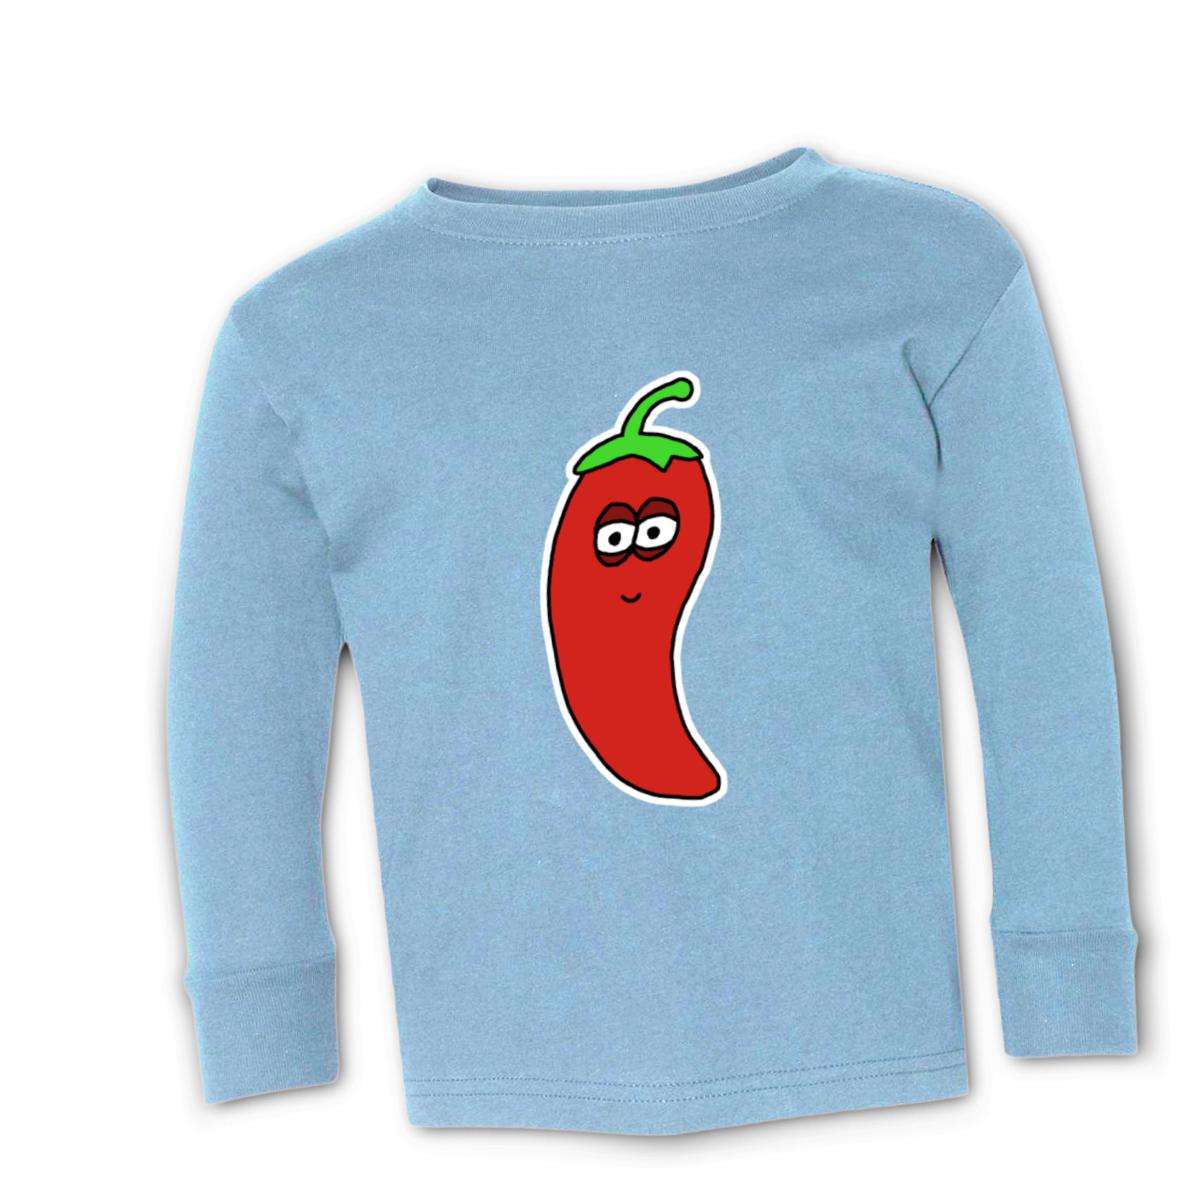 Chili Pepper Kid's Long Sleeve Tee Small light-blue